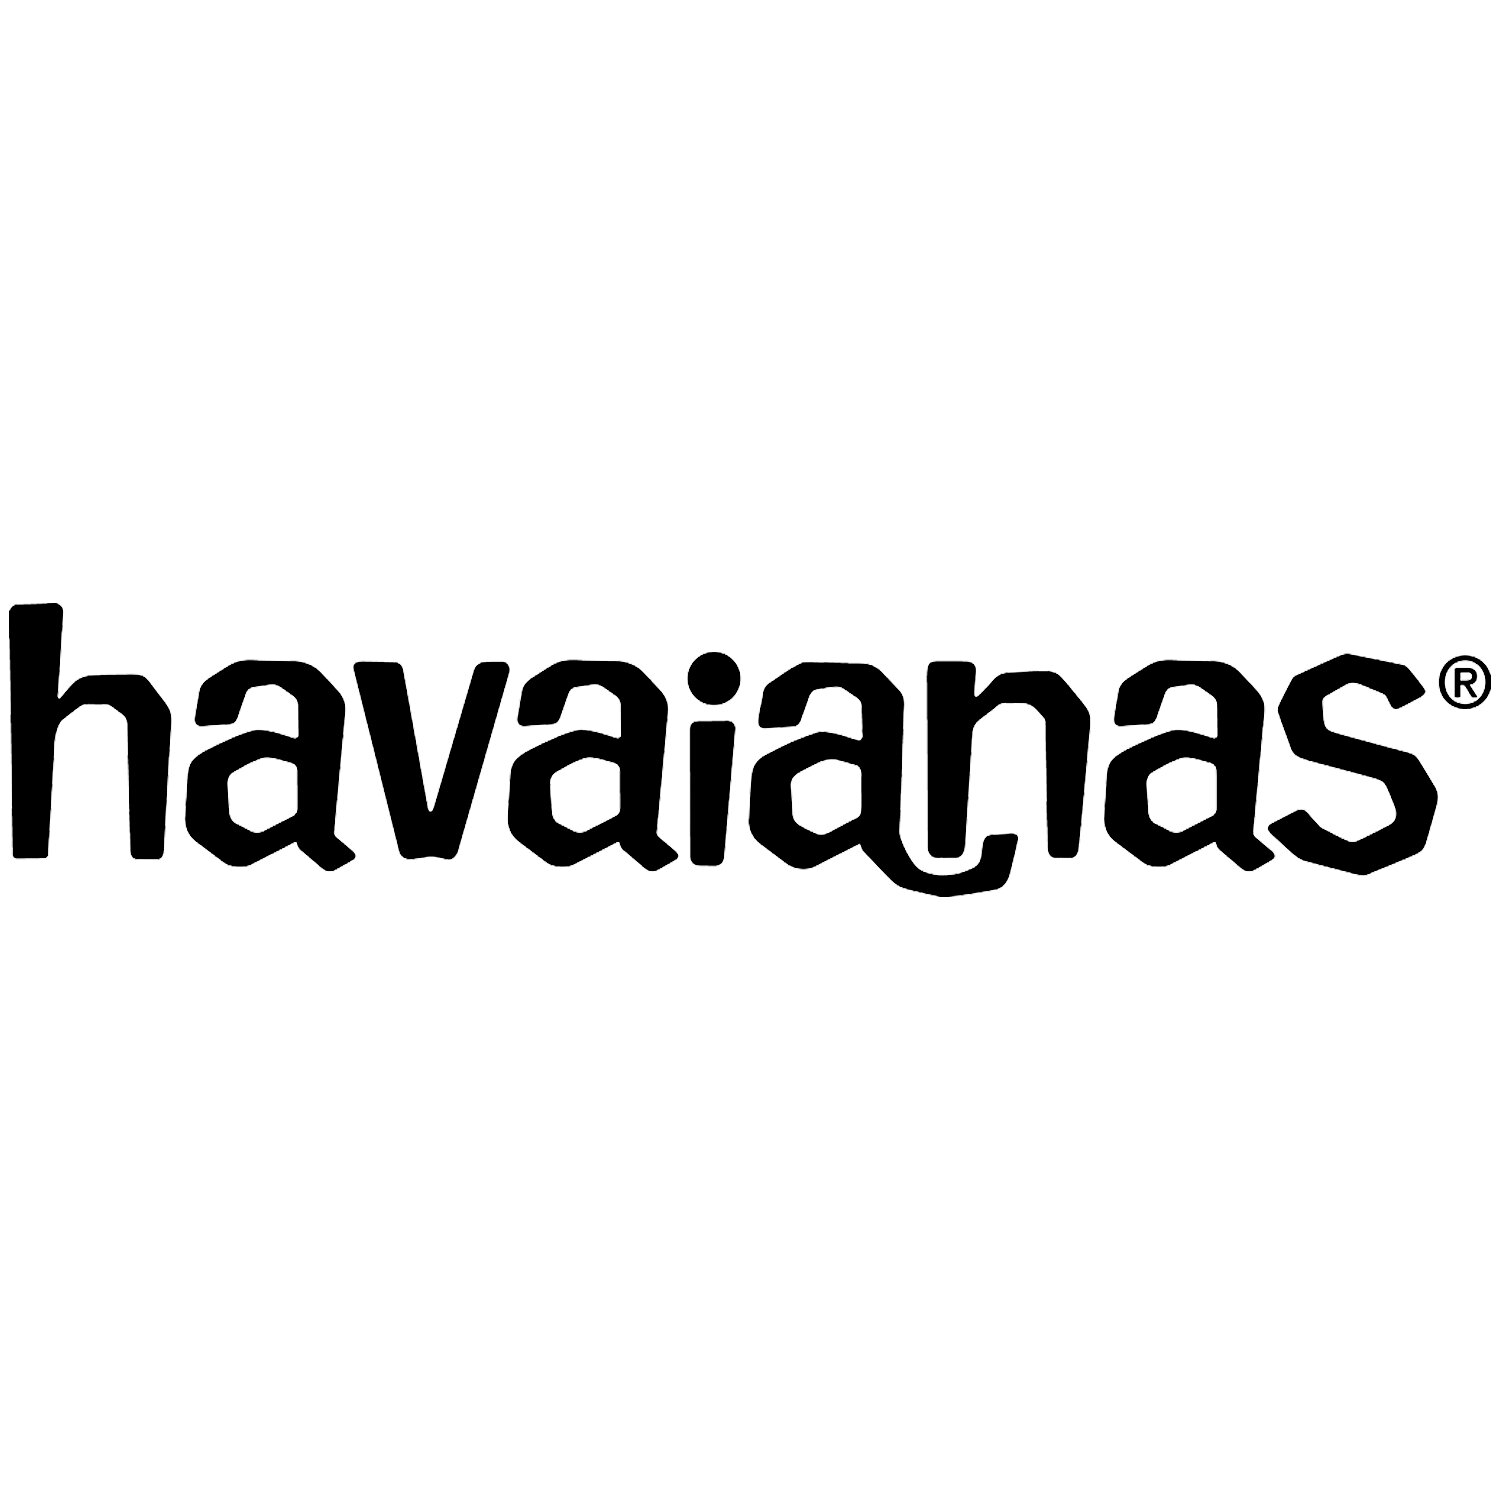 Havaianas_.jpg